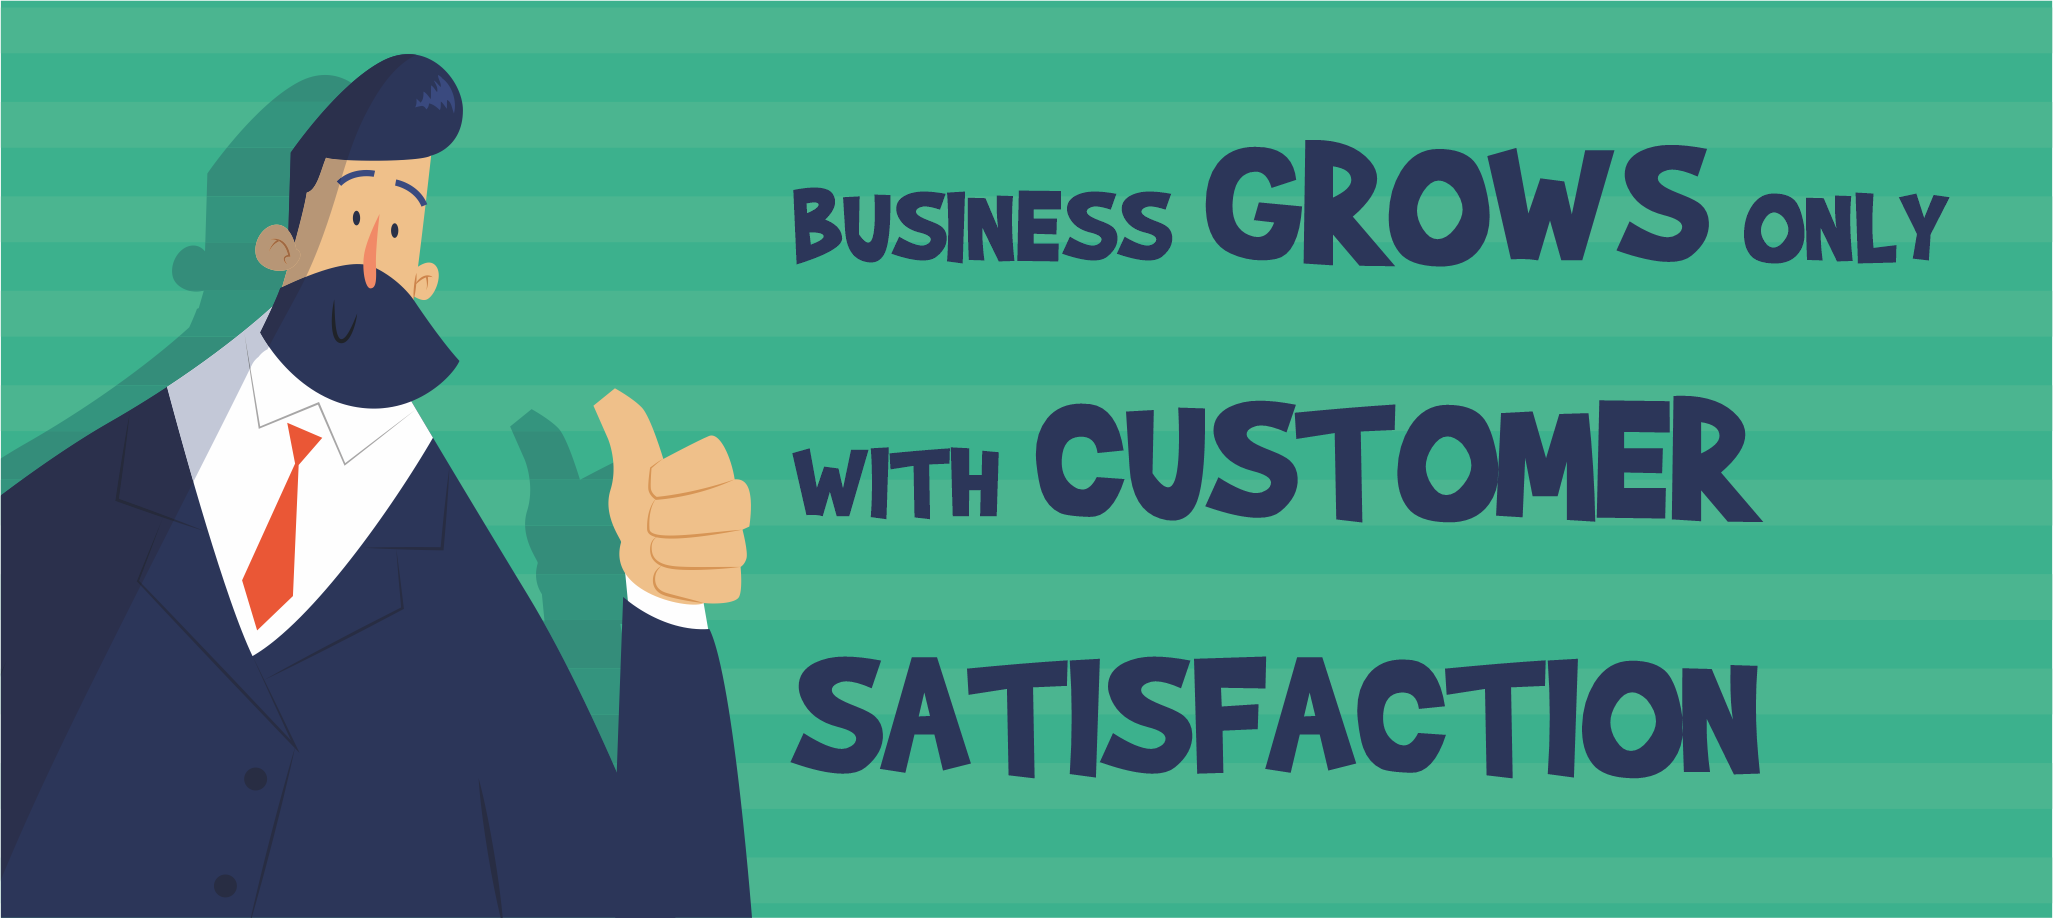 growth customer satisfaction